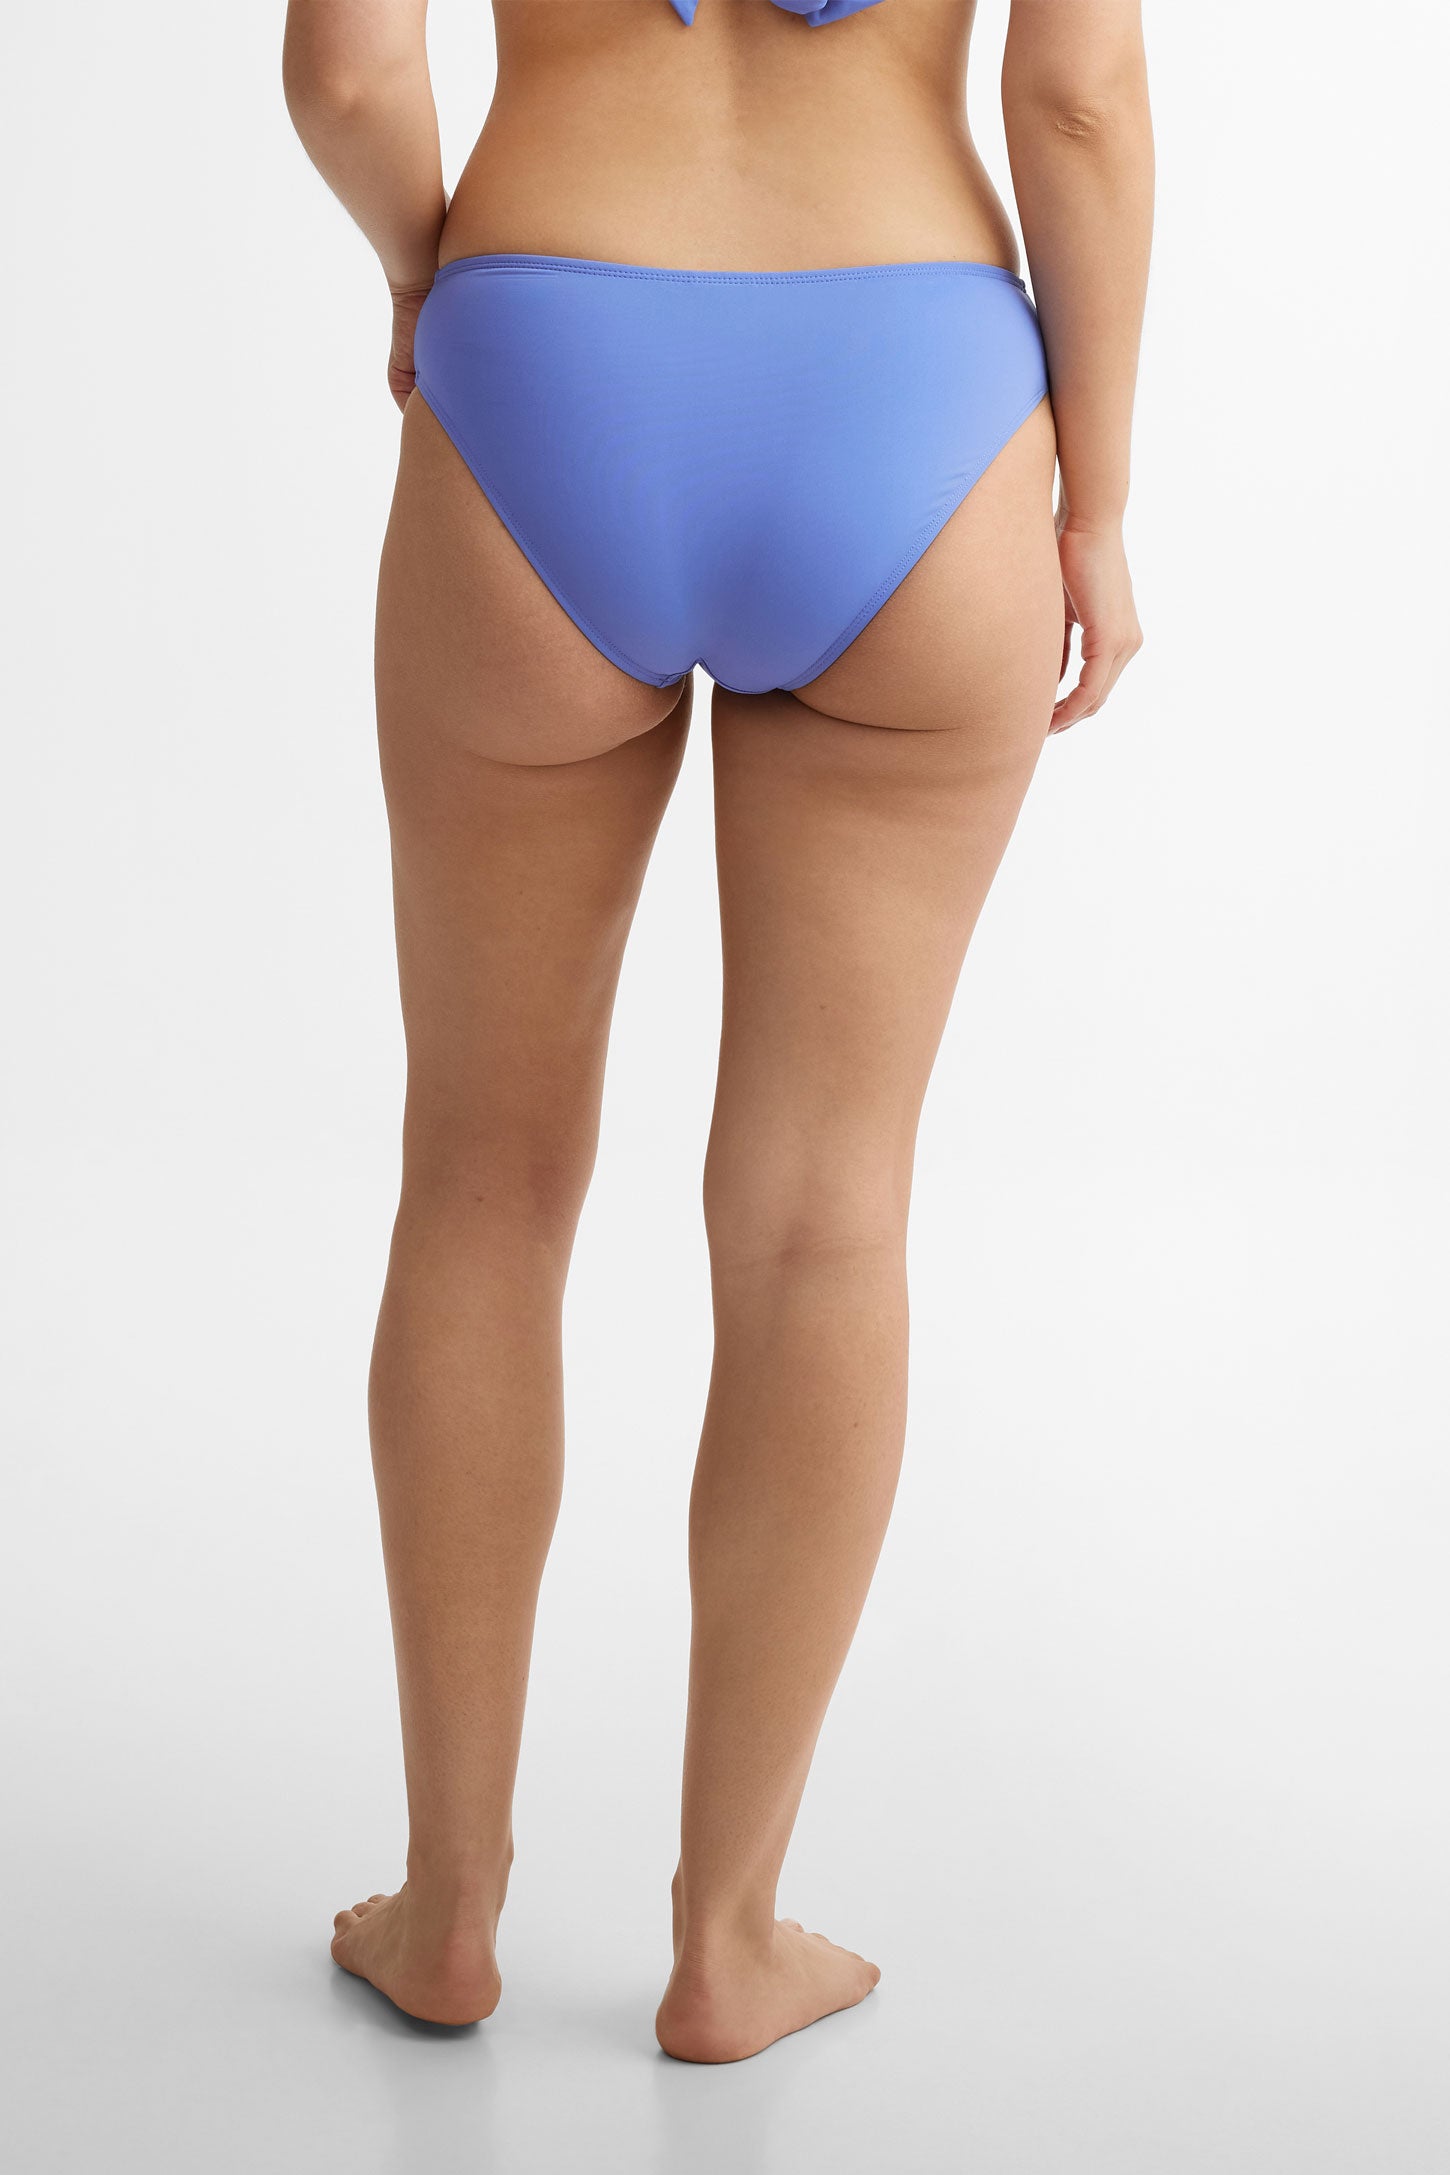 Culotte maillot de bain bikini, 2/40$ - Femme && BLEU